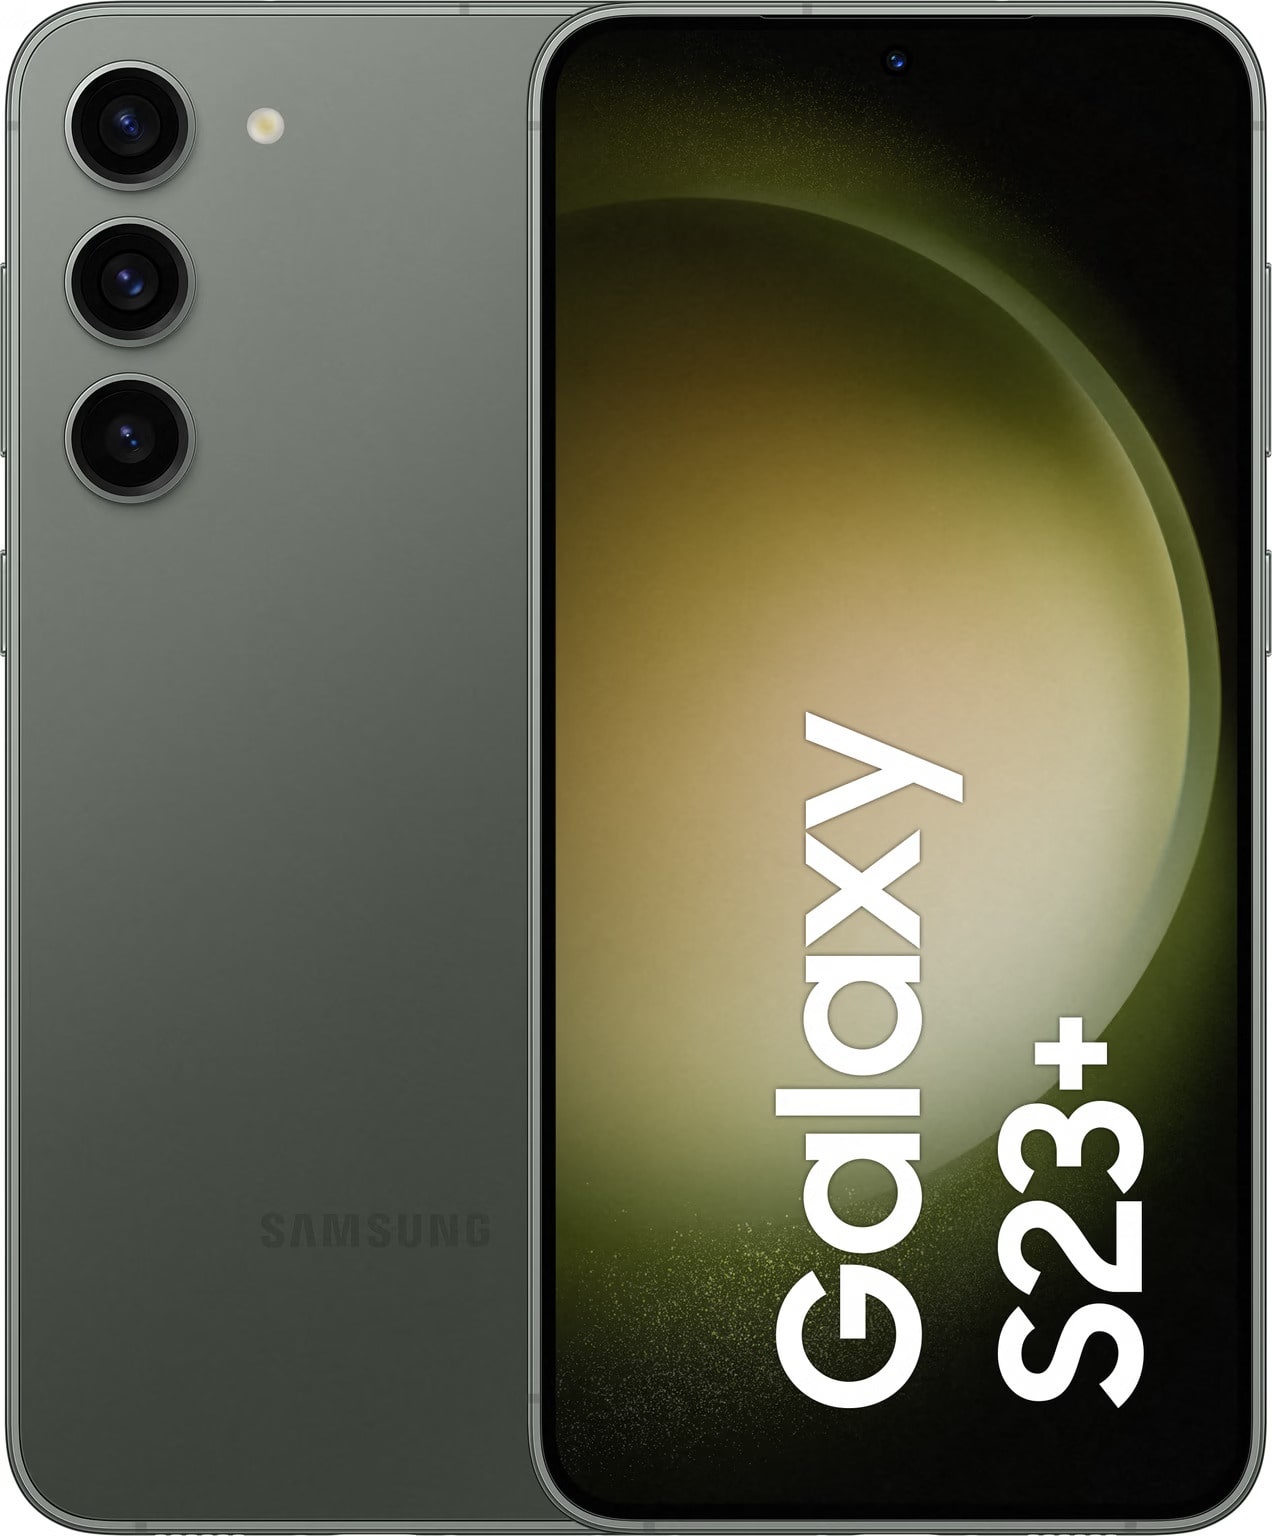 rand Bloemlezing Perth Samsung Galaxy S23 Plus 256GB Groen - Direct leverbaar - Beste prijs! -  Dutch Plaza